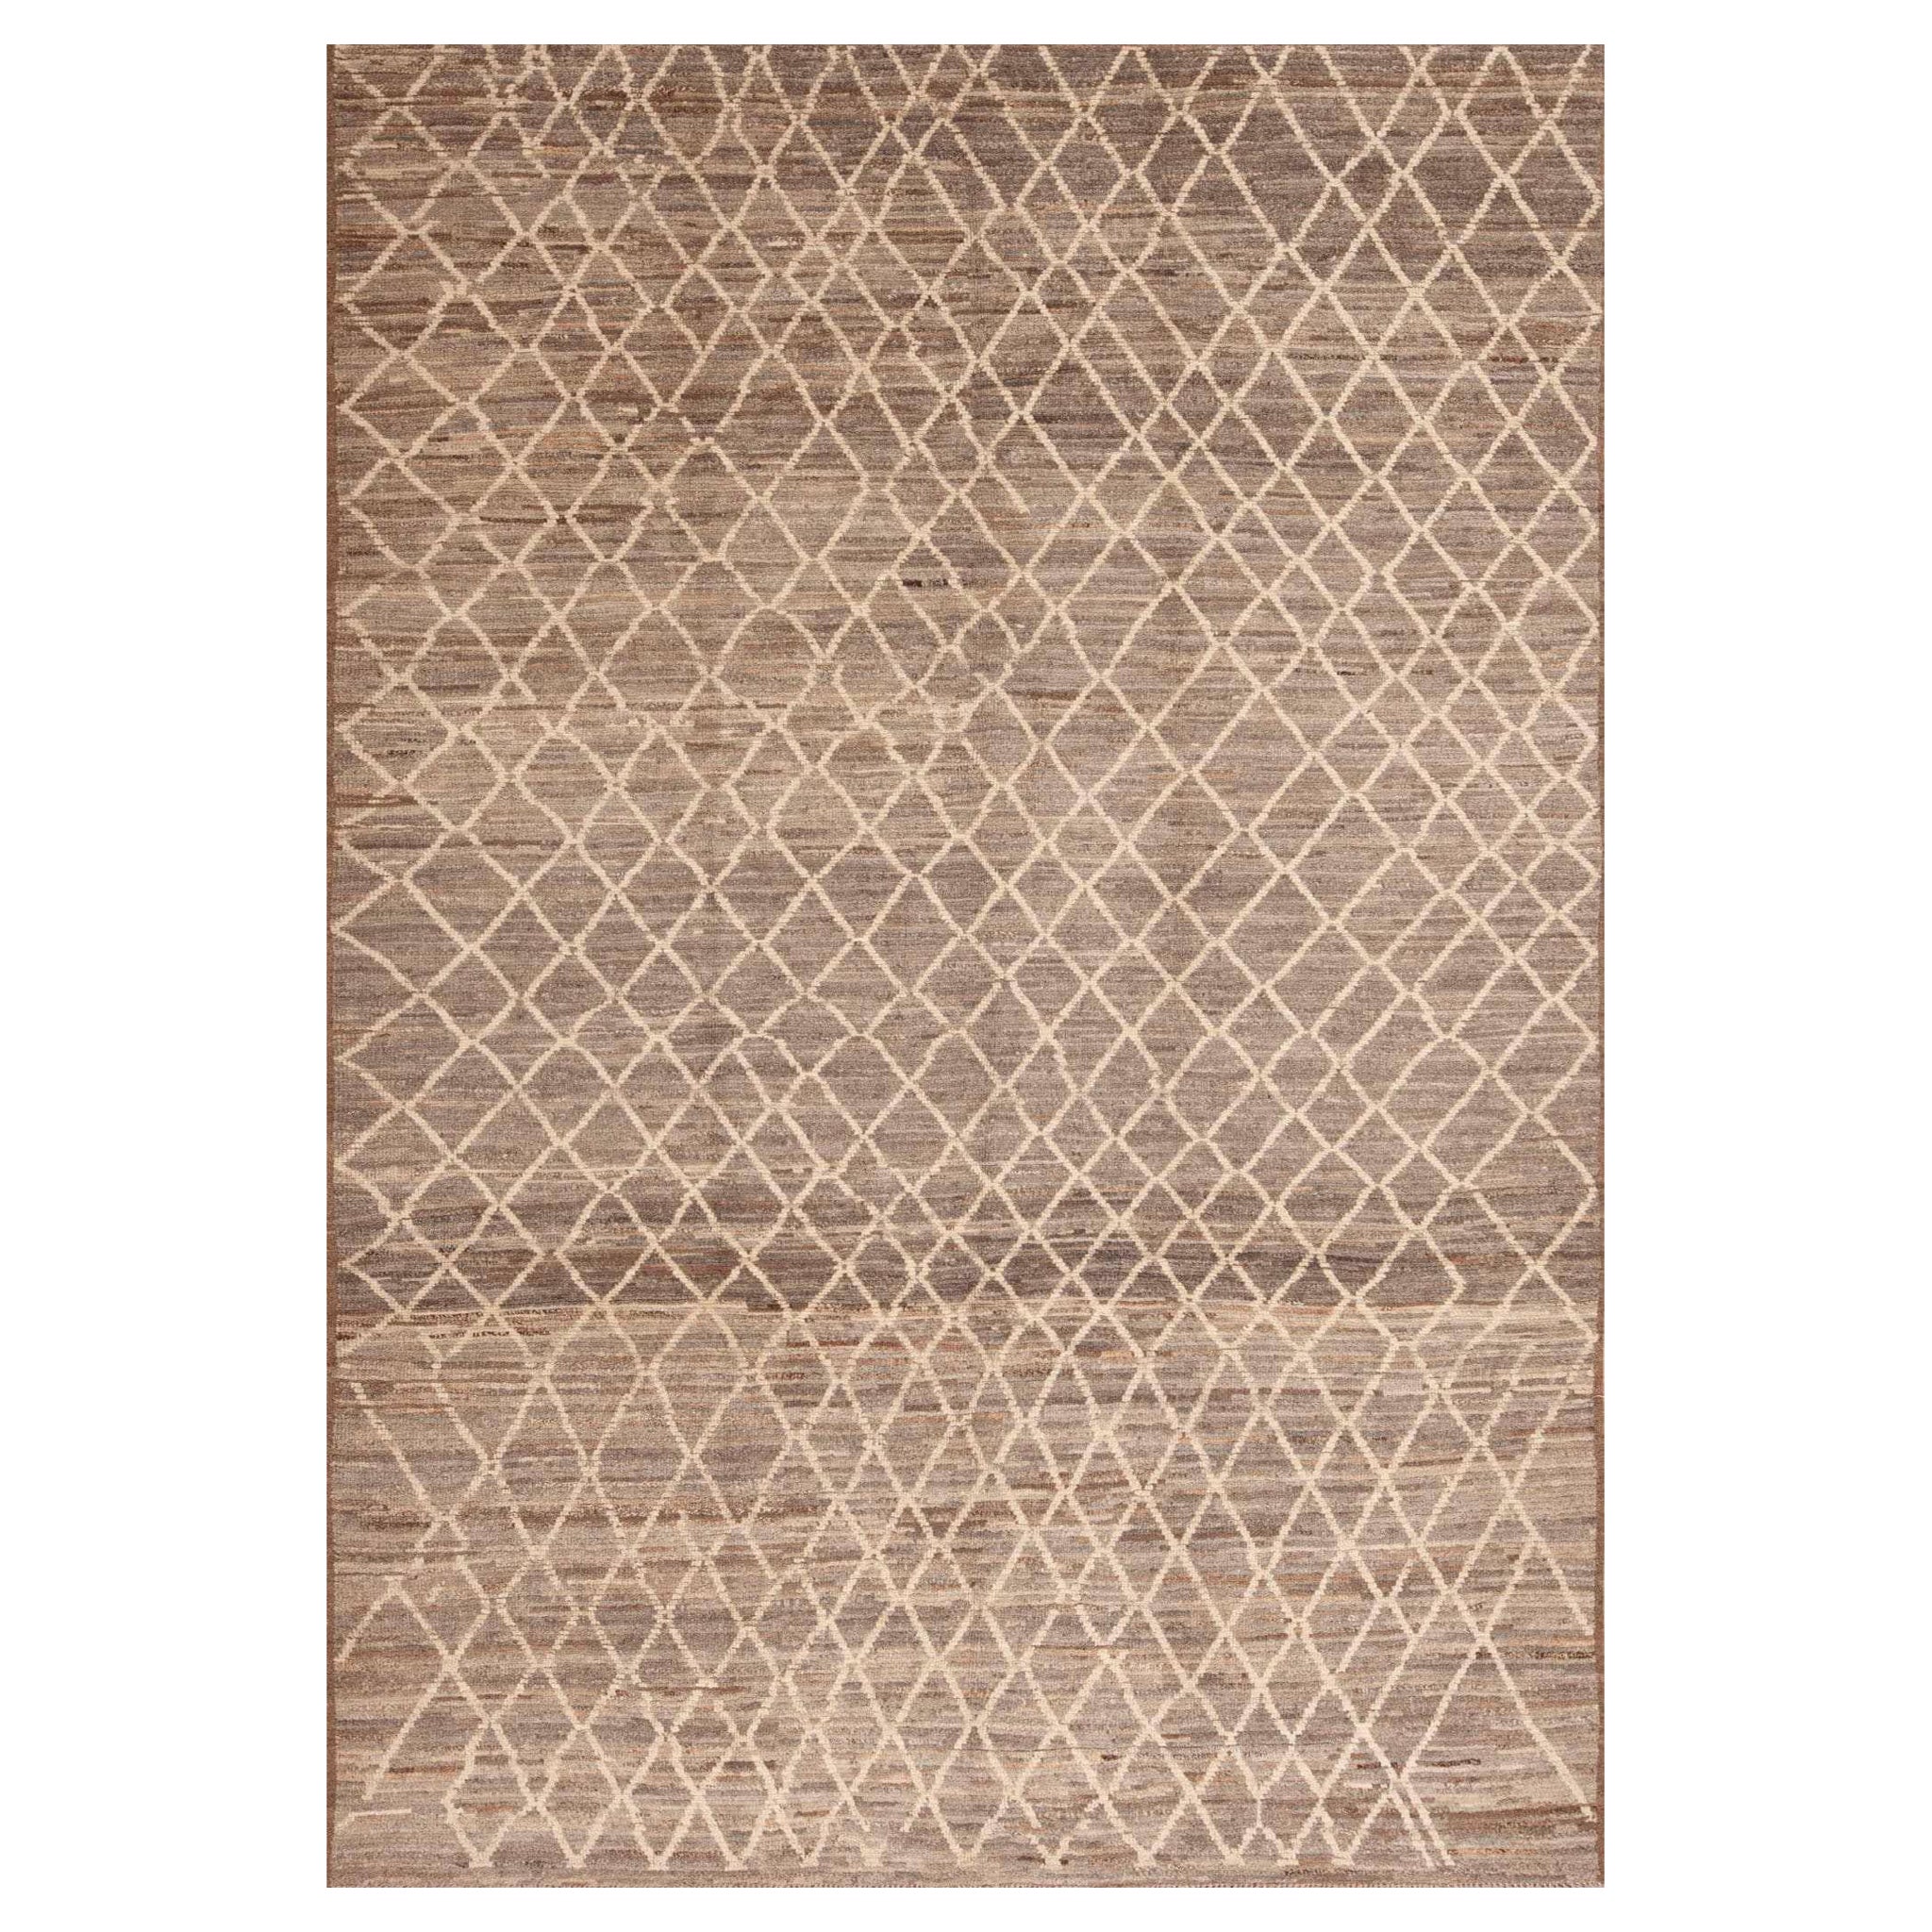 Nazmiyal Collection Modern Grey Abrash Ivory Tribal Geometric Rug 6'6" x 9'4"